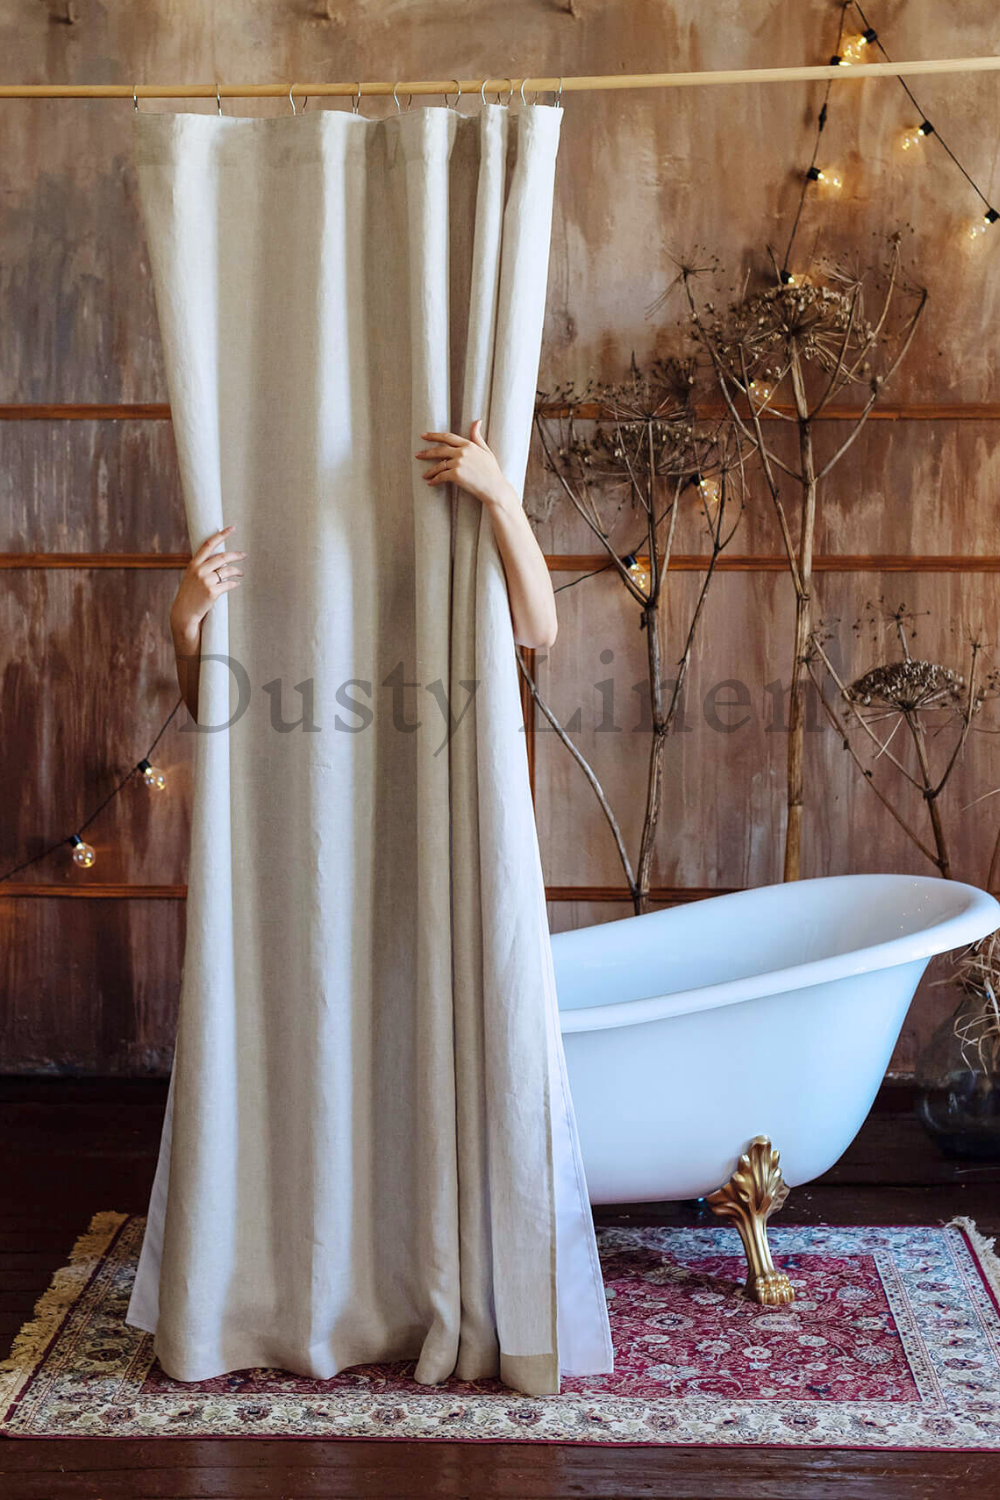 Best housewarming gift - Bathroom decoration with Dusty Linen natural light bathroom shower drape